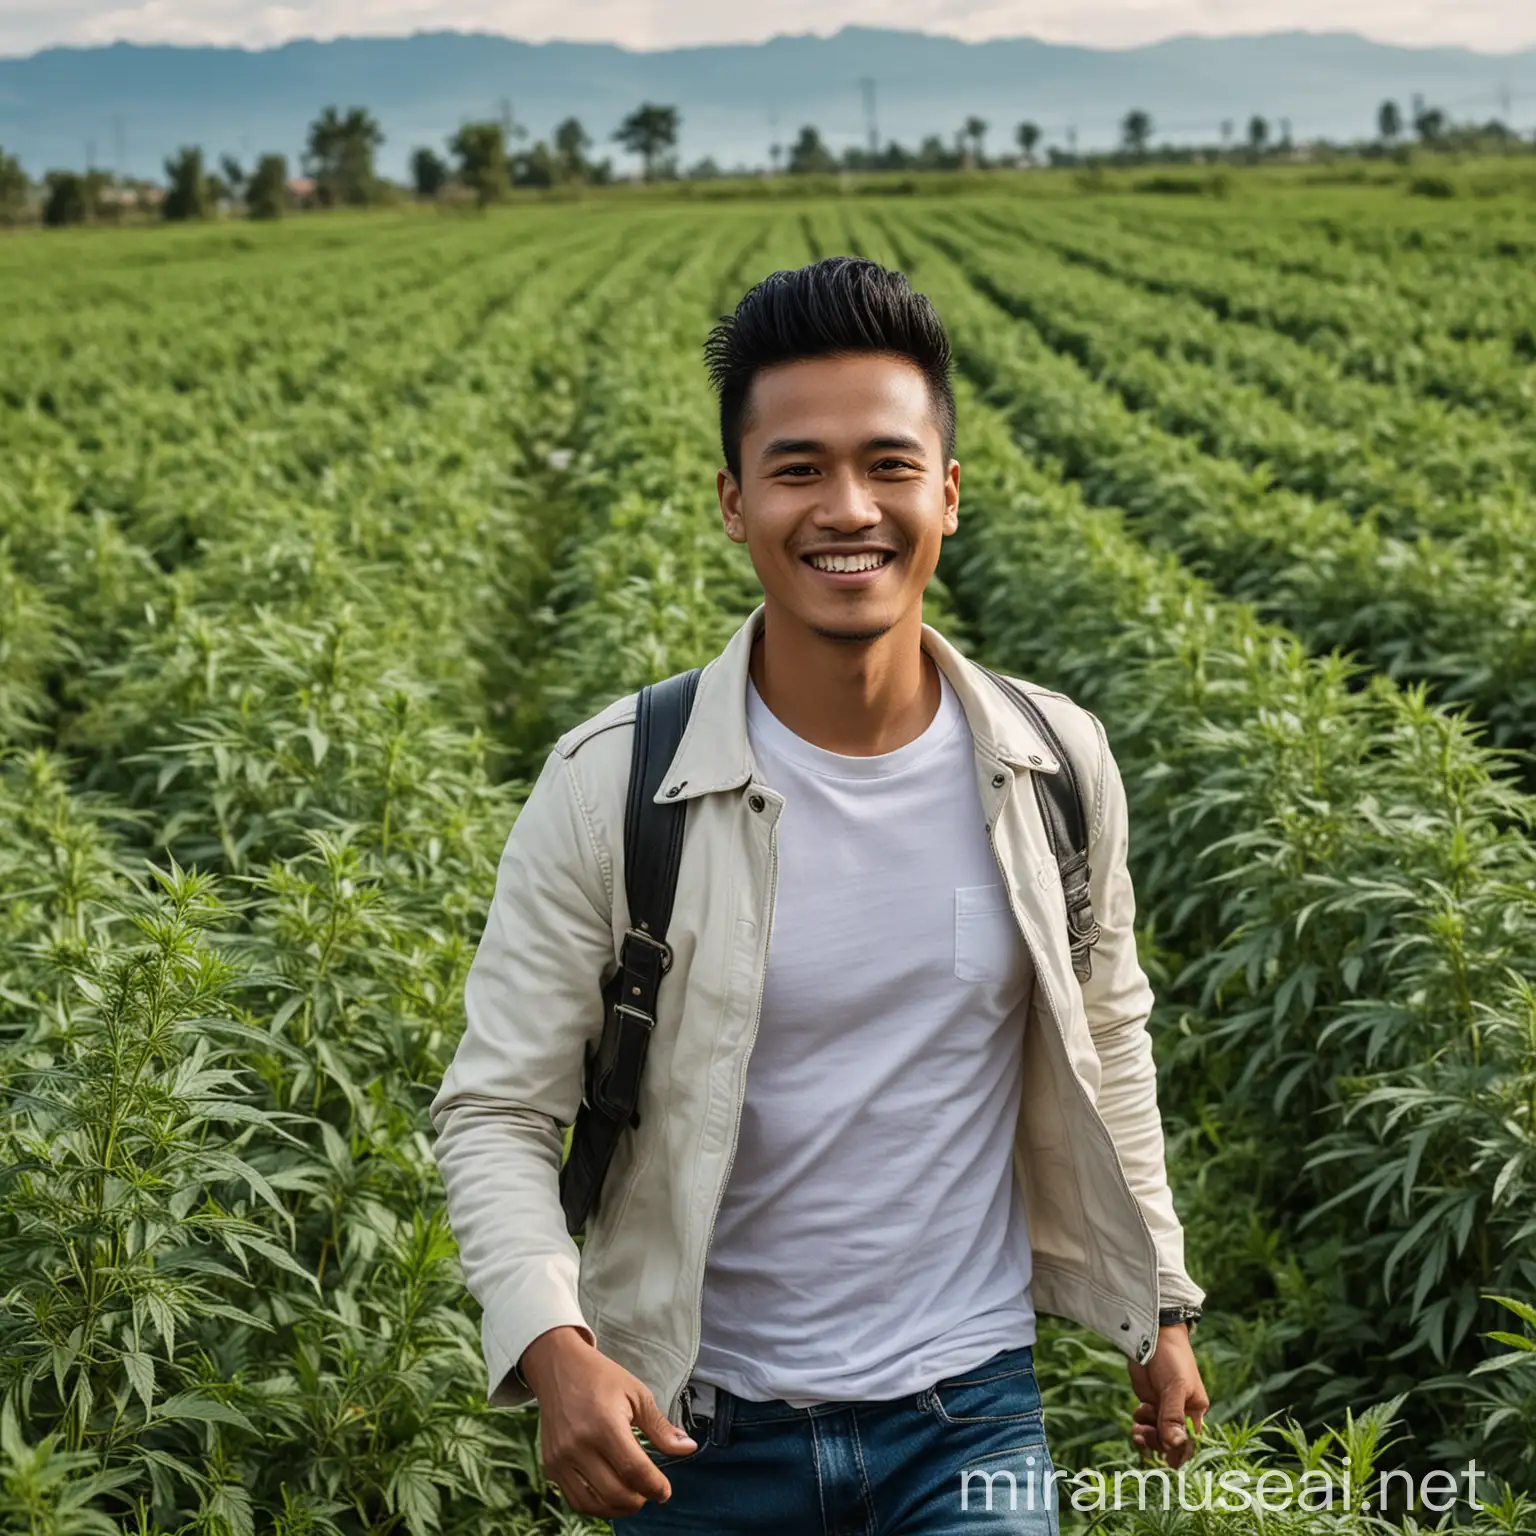 Smiling Indonesian Man Walking in Marijuana Field Under Bright Blue Sky